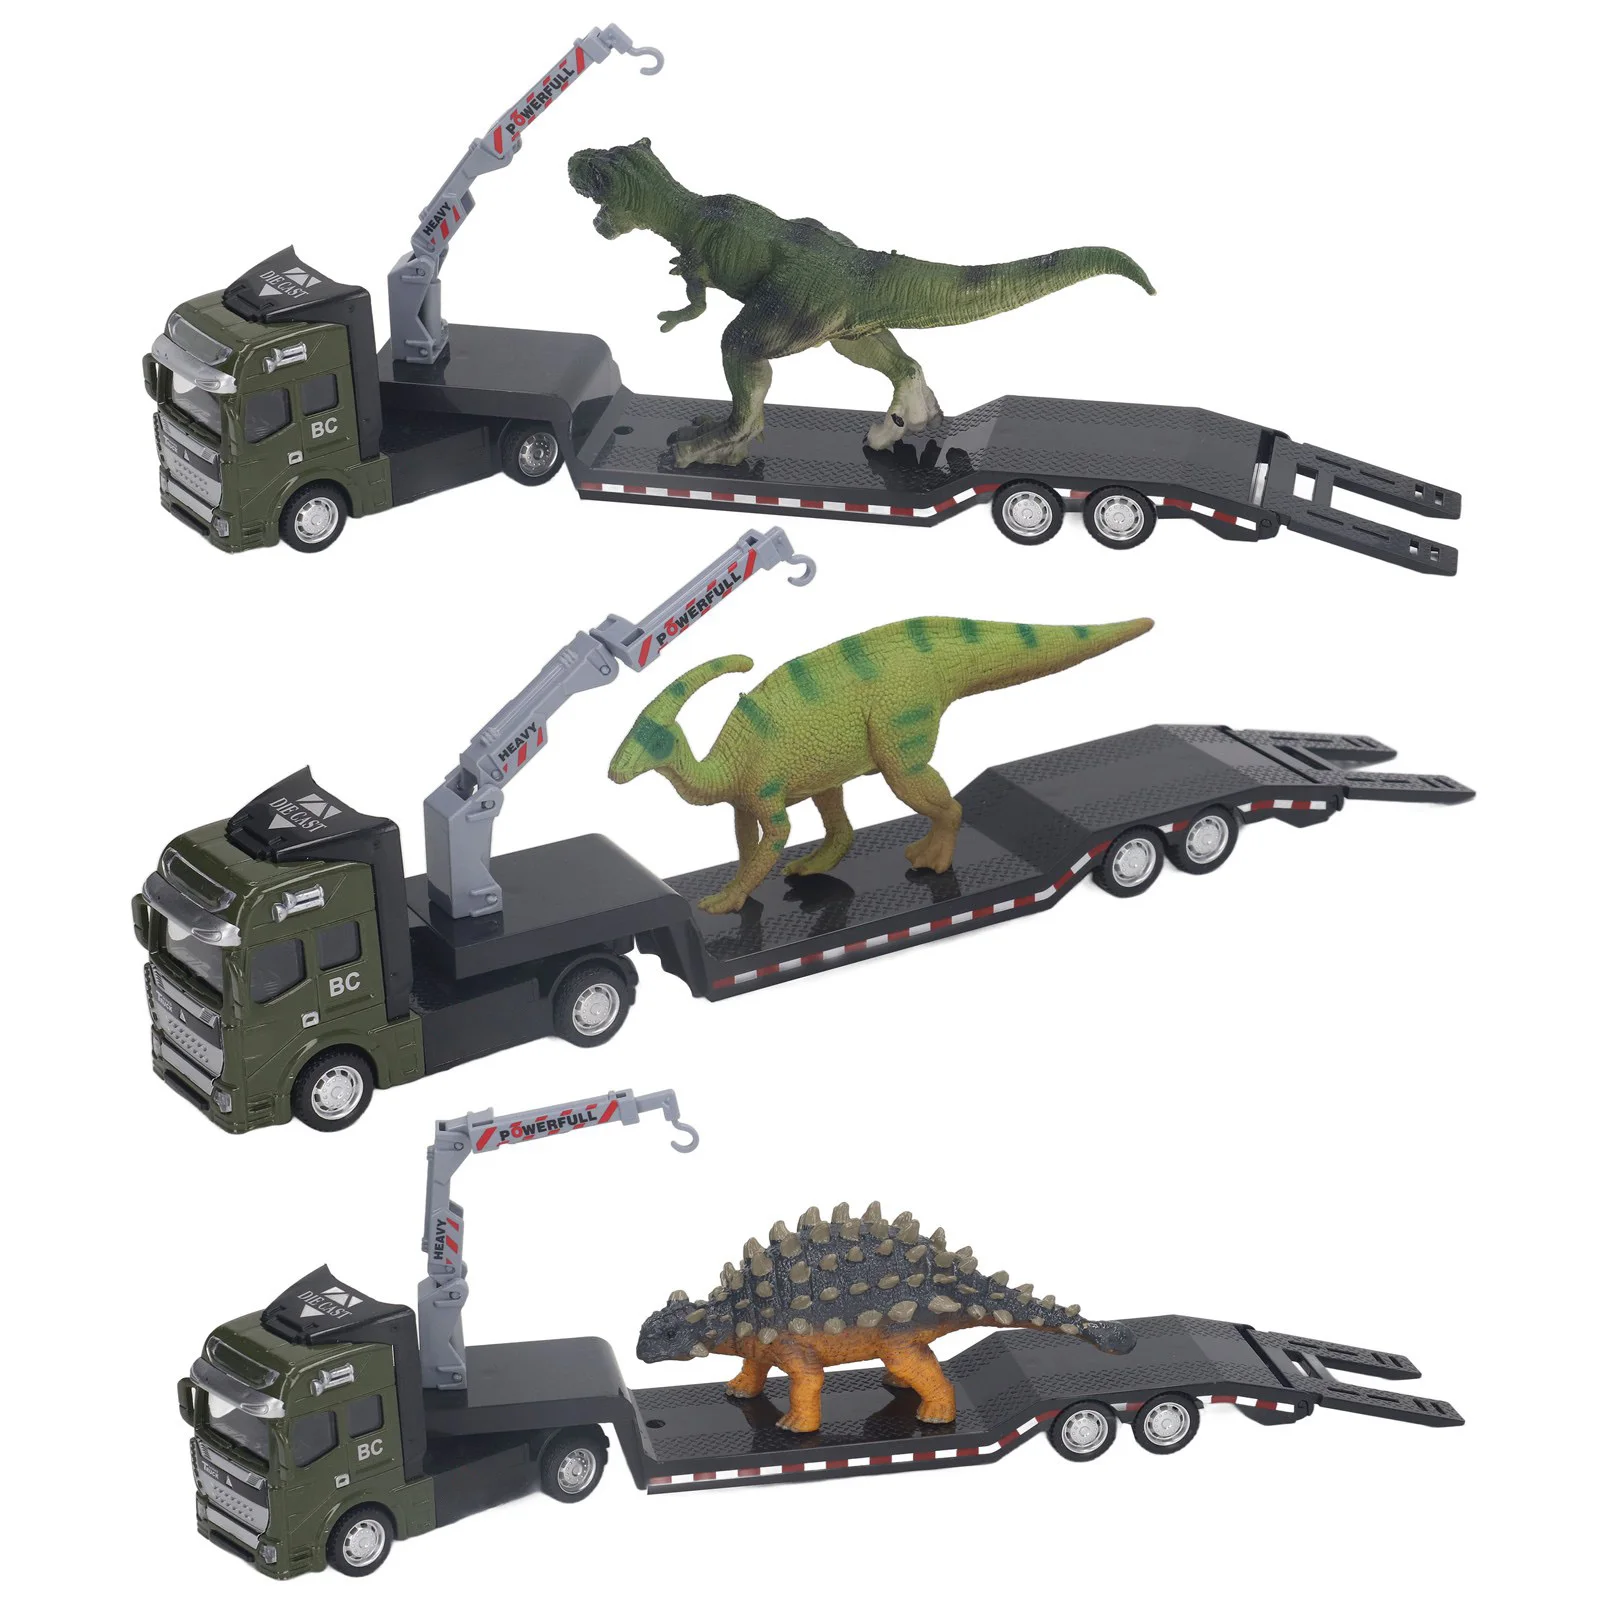 1:50 Dinosaur Transport Trailer Toy Simulation Alloy Dinosaur Truck Model Kids Cognitive Toy Gift For Children